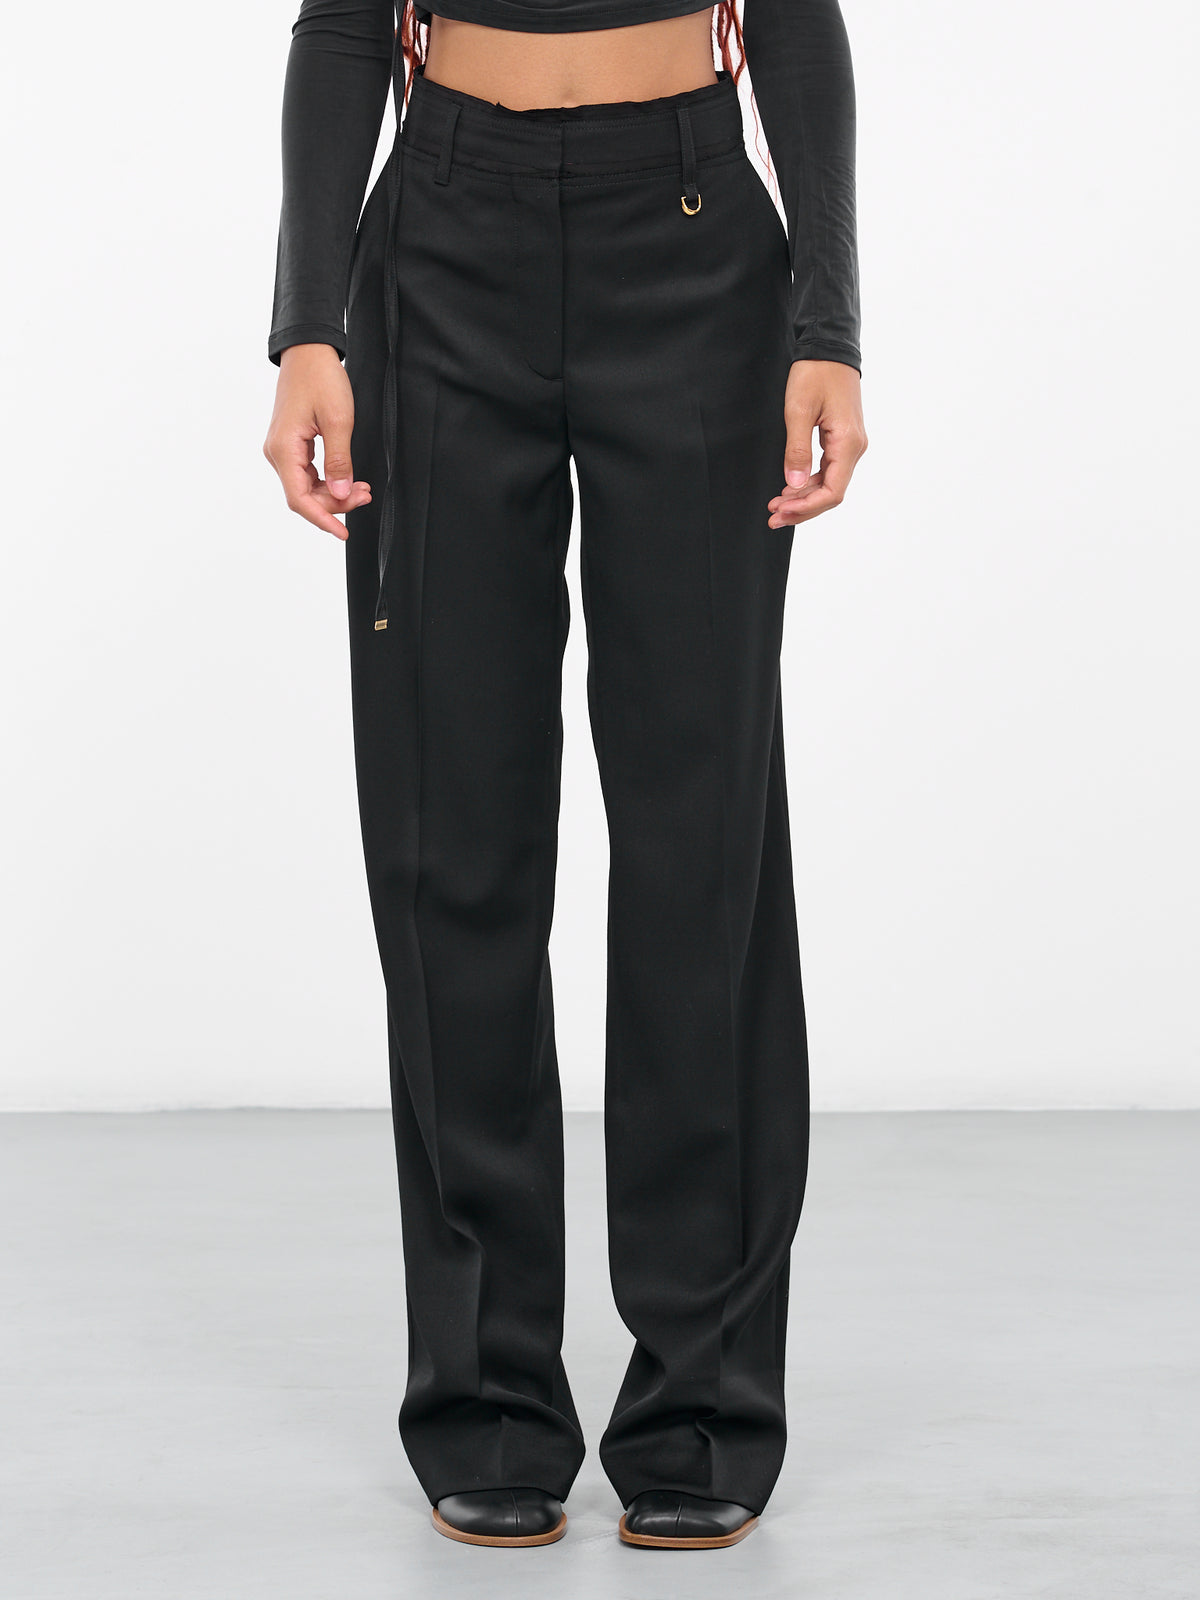 Le pantalon Ficelle (233PA064-1333-BLACK)